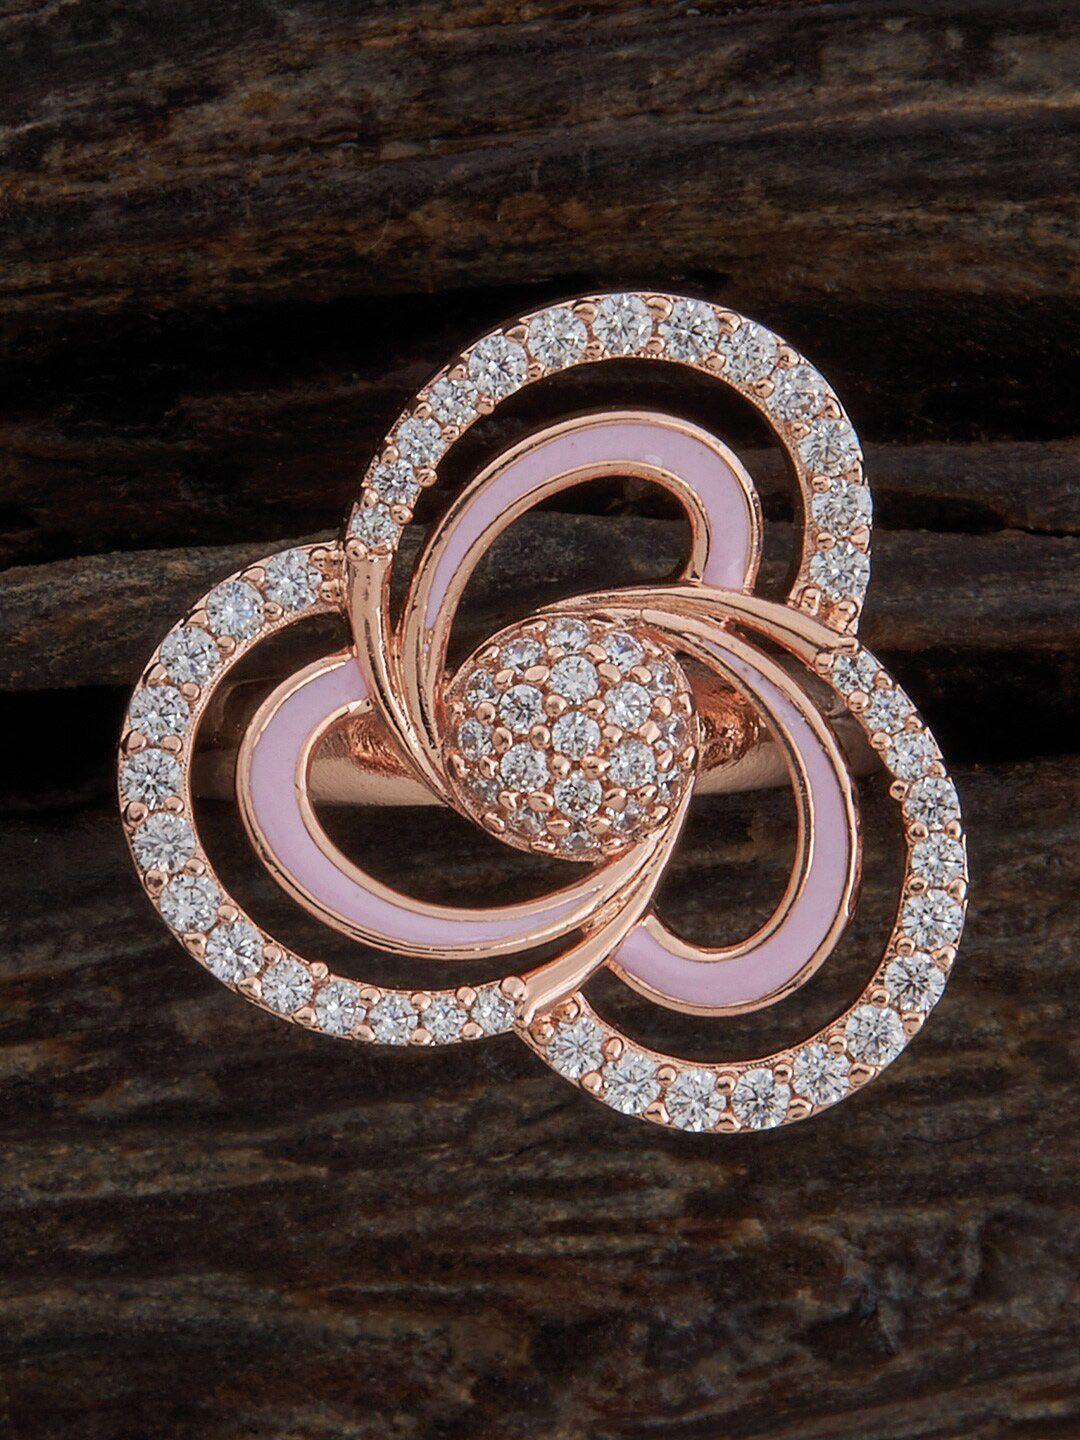 kushal's fashion jewellery rose gold-plated cz-studded ring